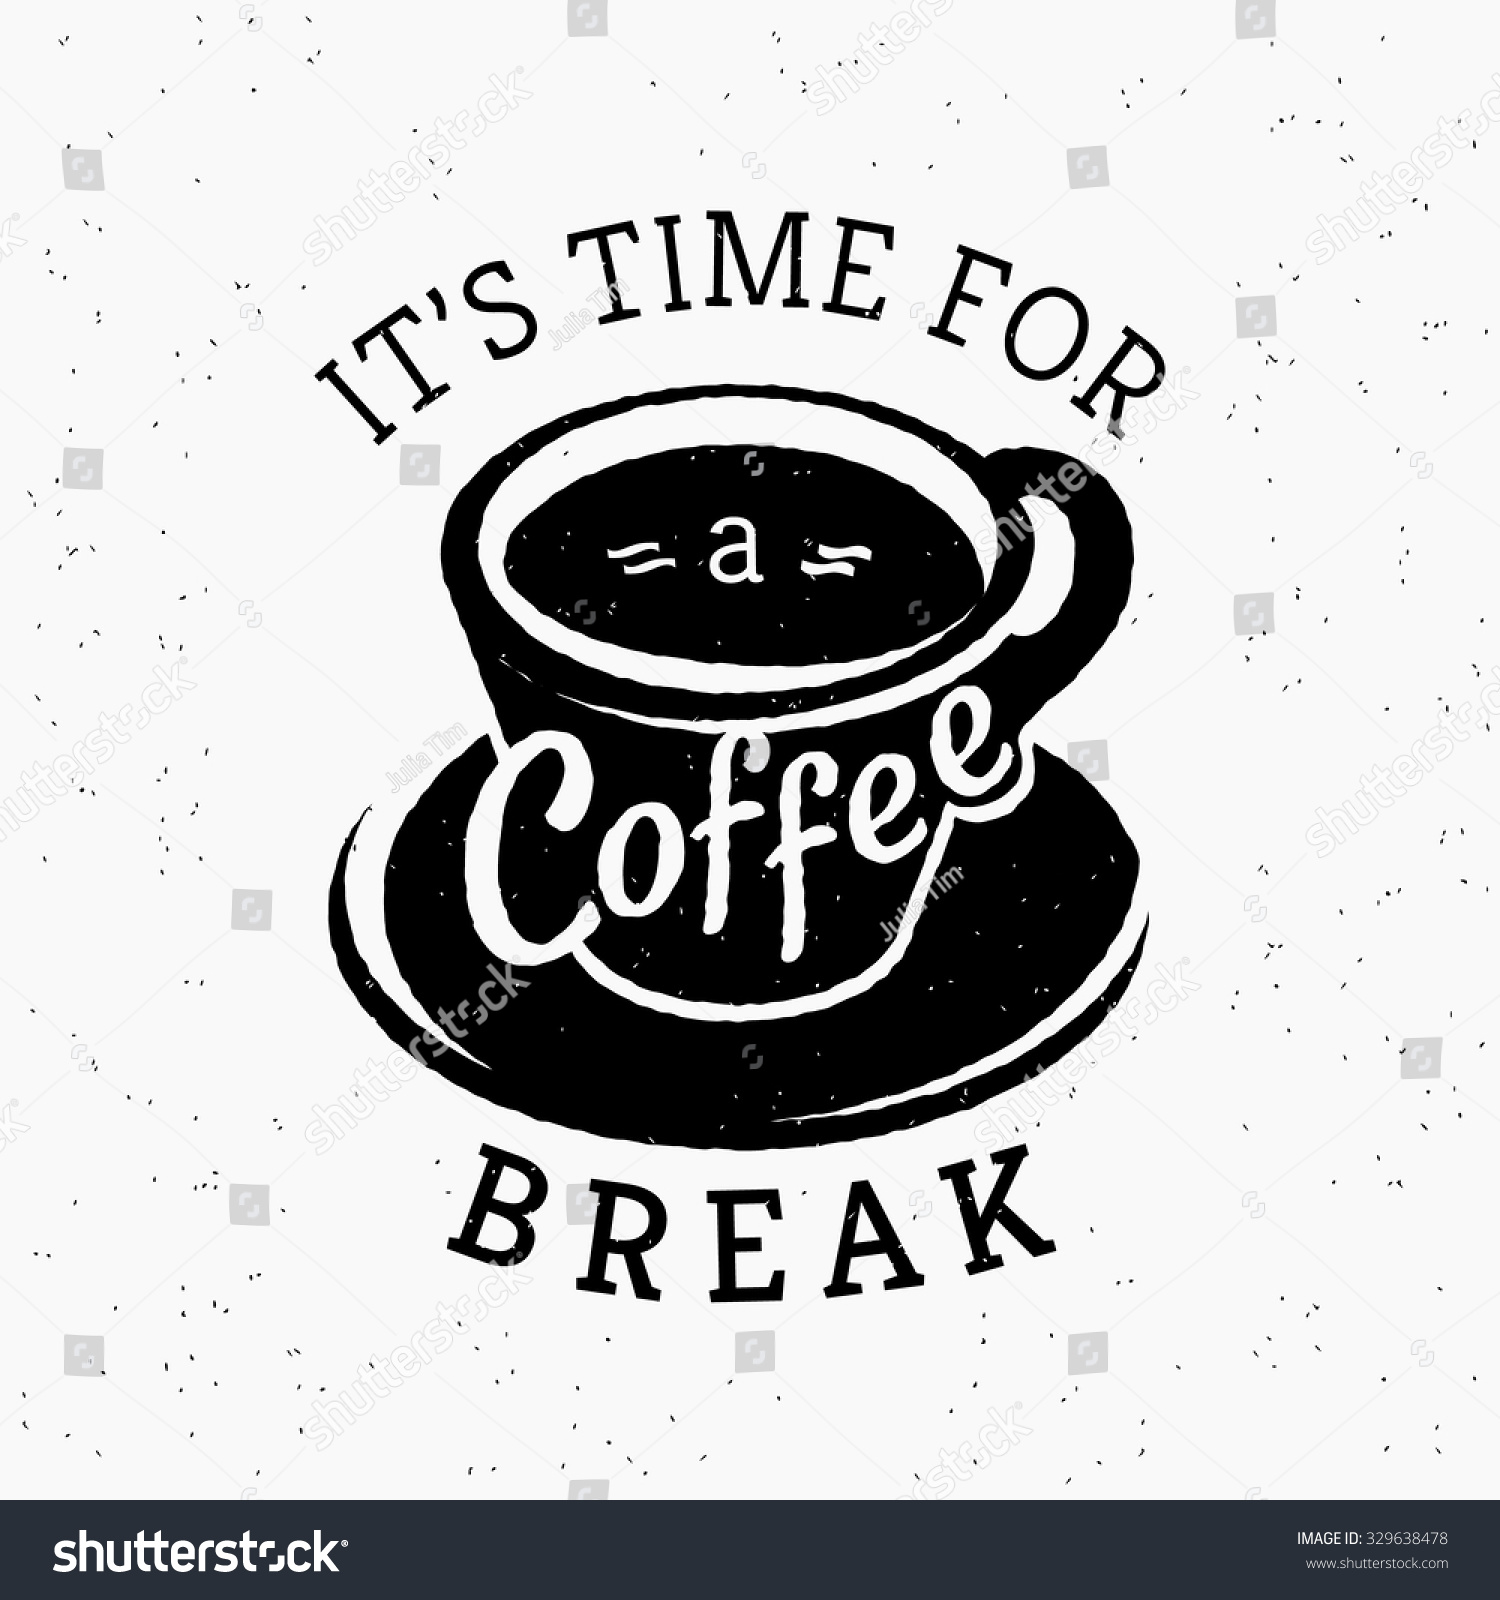 coffee break clipart - photo #40